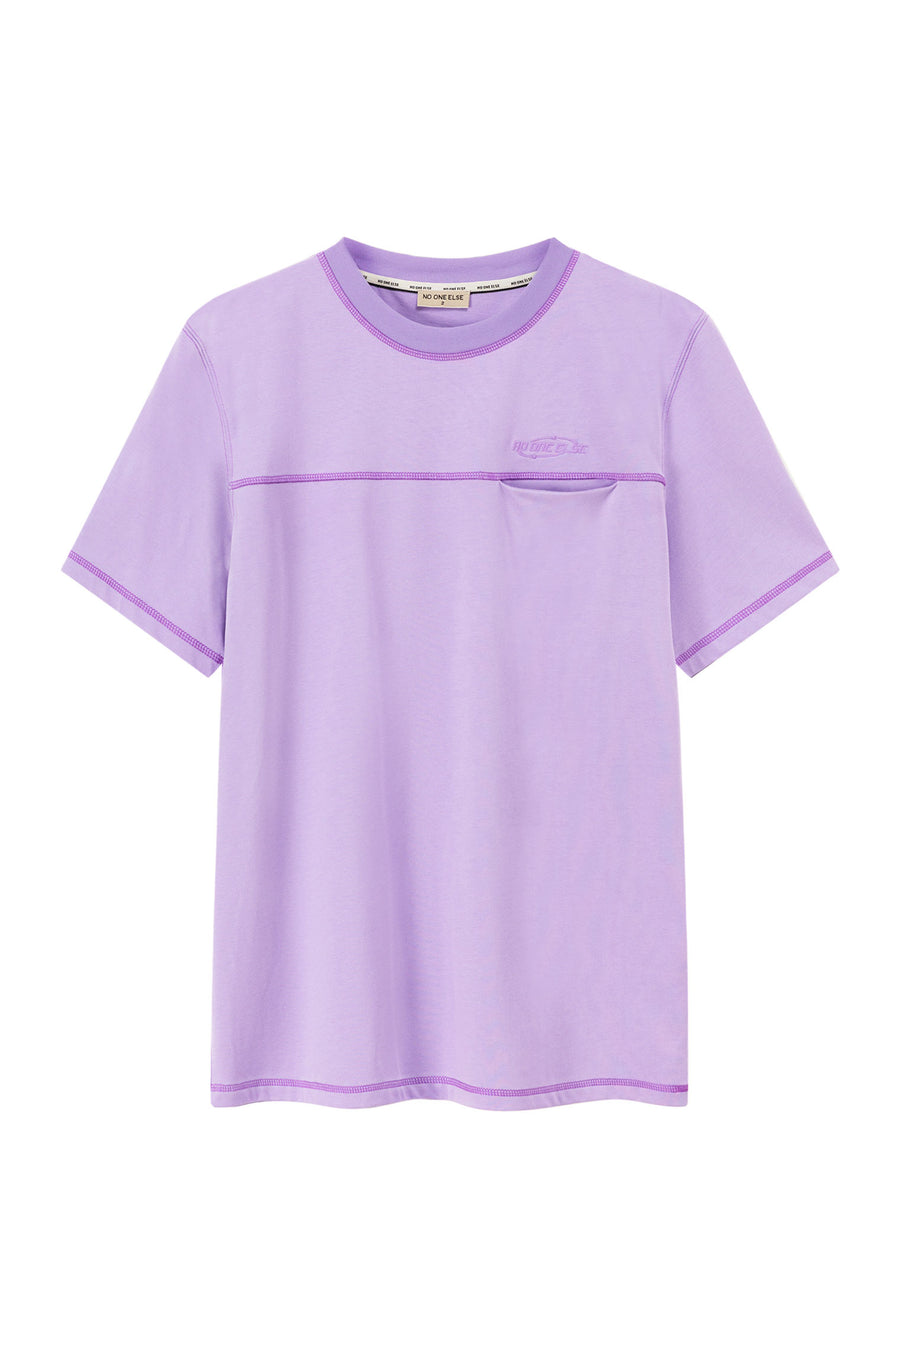 CHUU Letter Color Loose Fit  T-Shirt